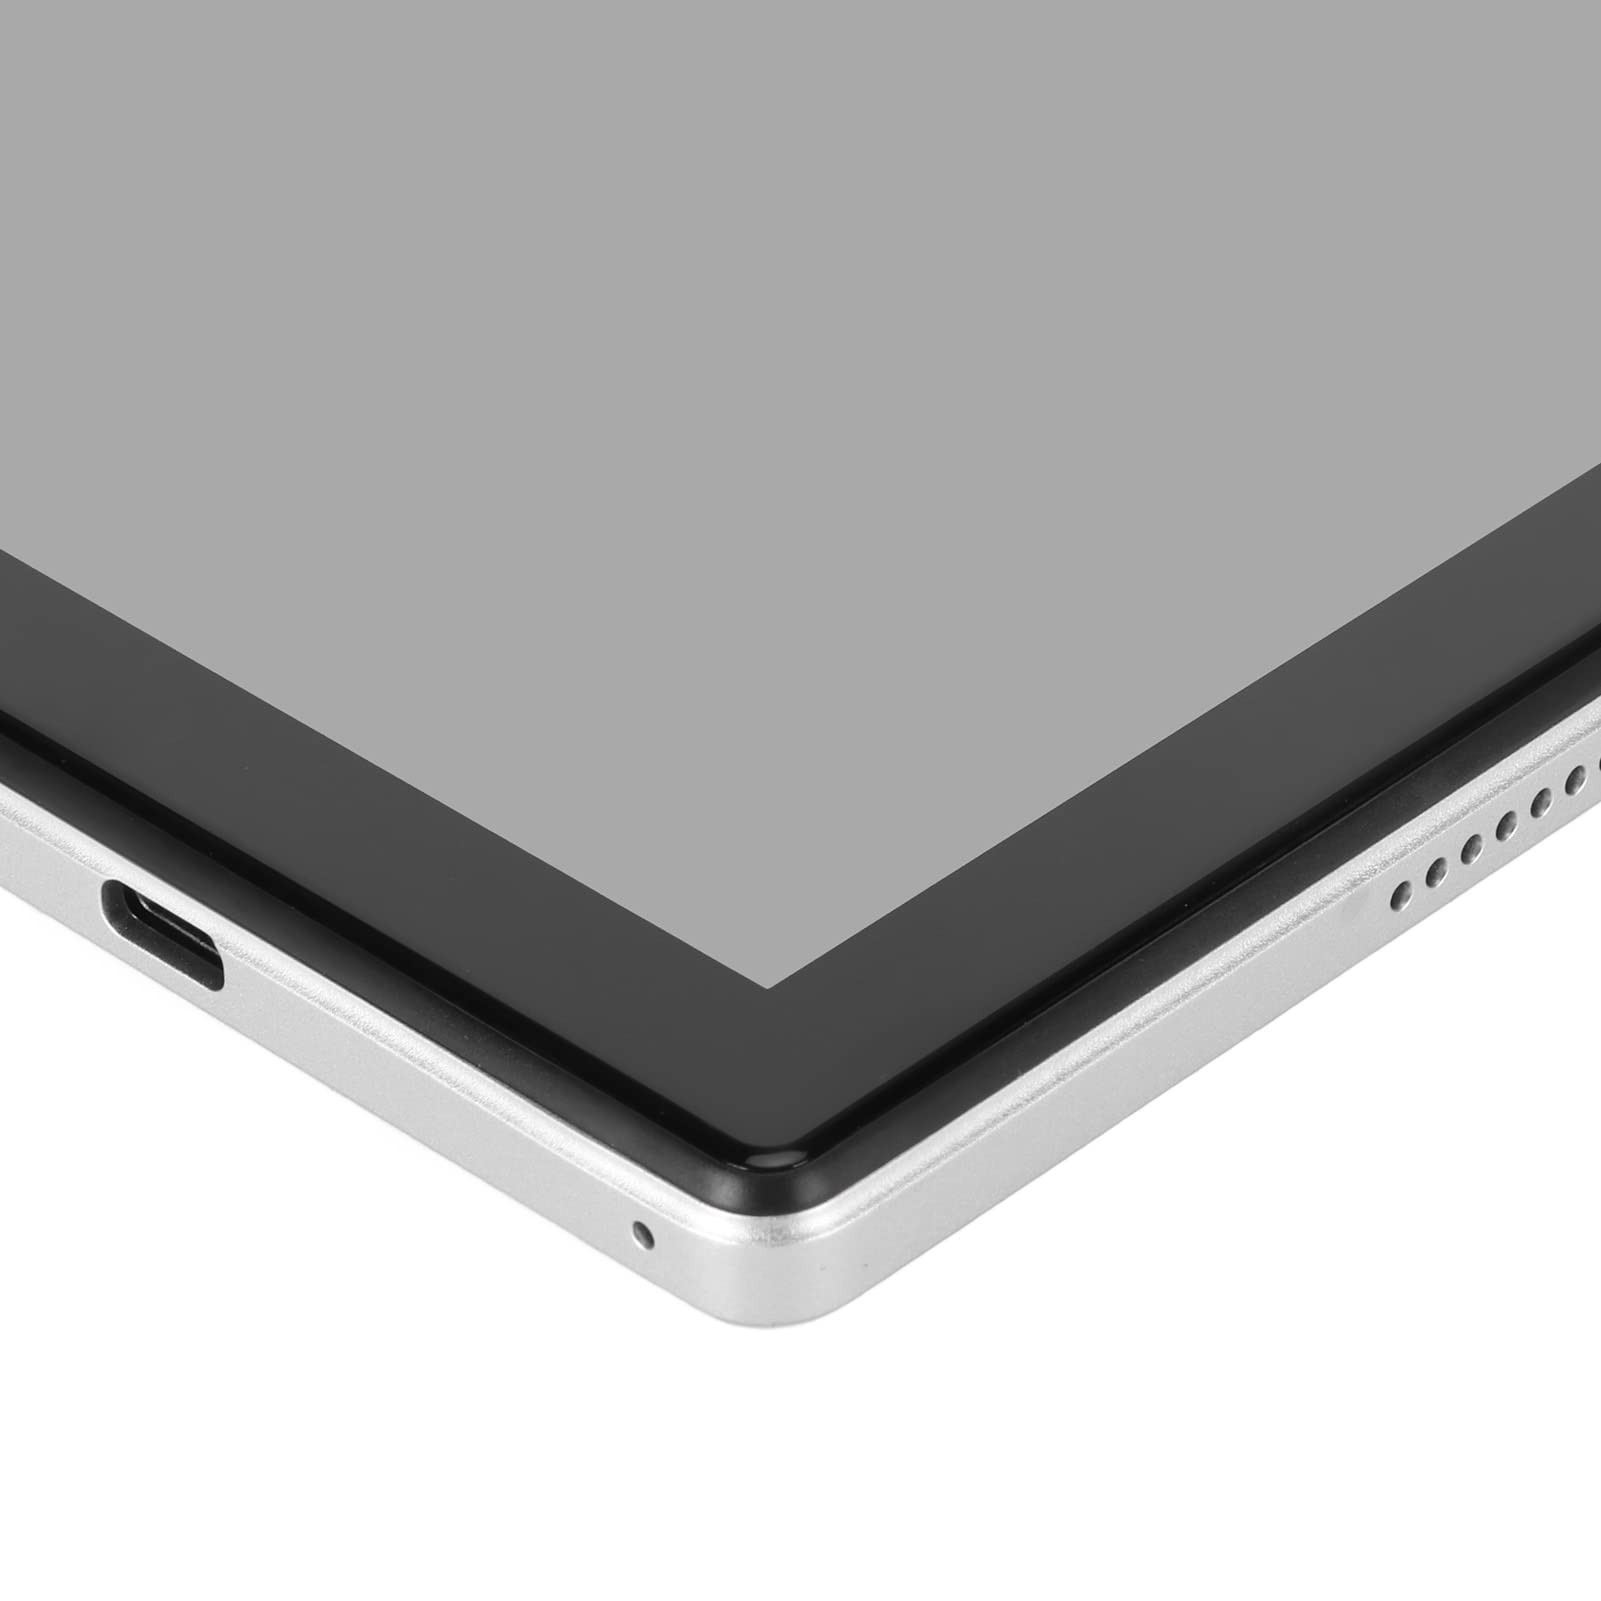 Qinlorgo 10.1 Inch Tablet PC USB C Charging Port 100-240V Tablet PC Octa Core 8GB RAM 256GB ROM White for Student School Office (US Plug)